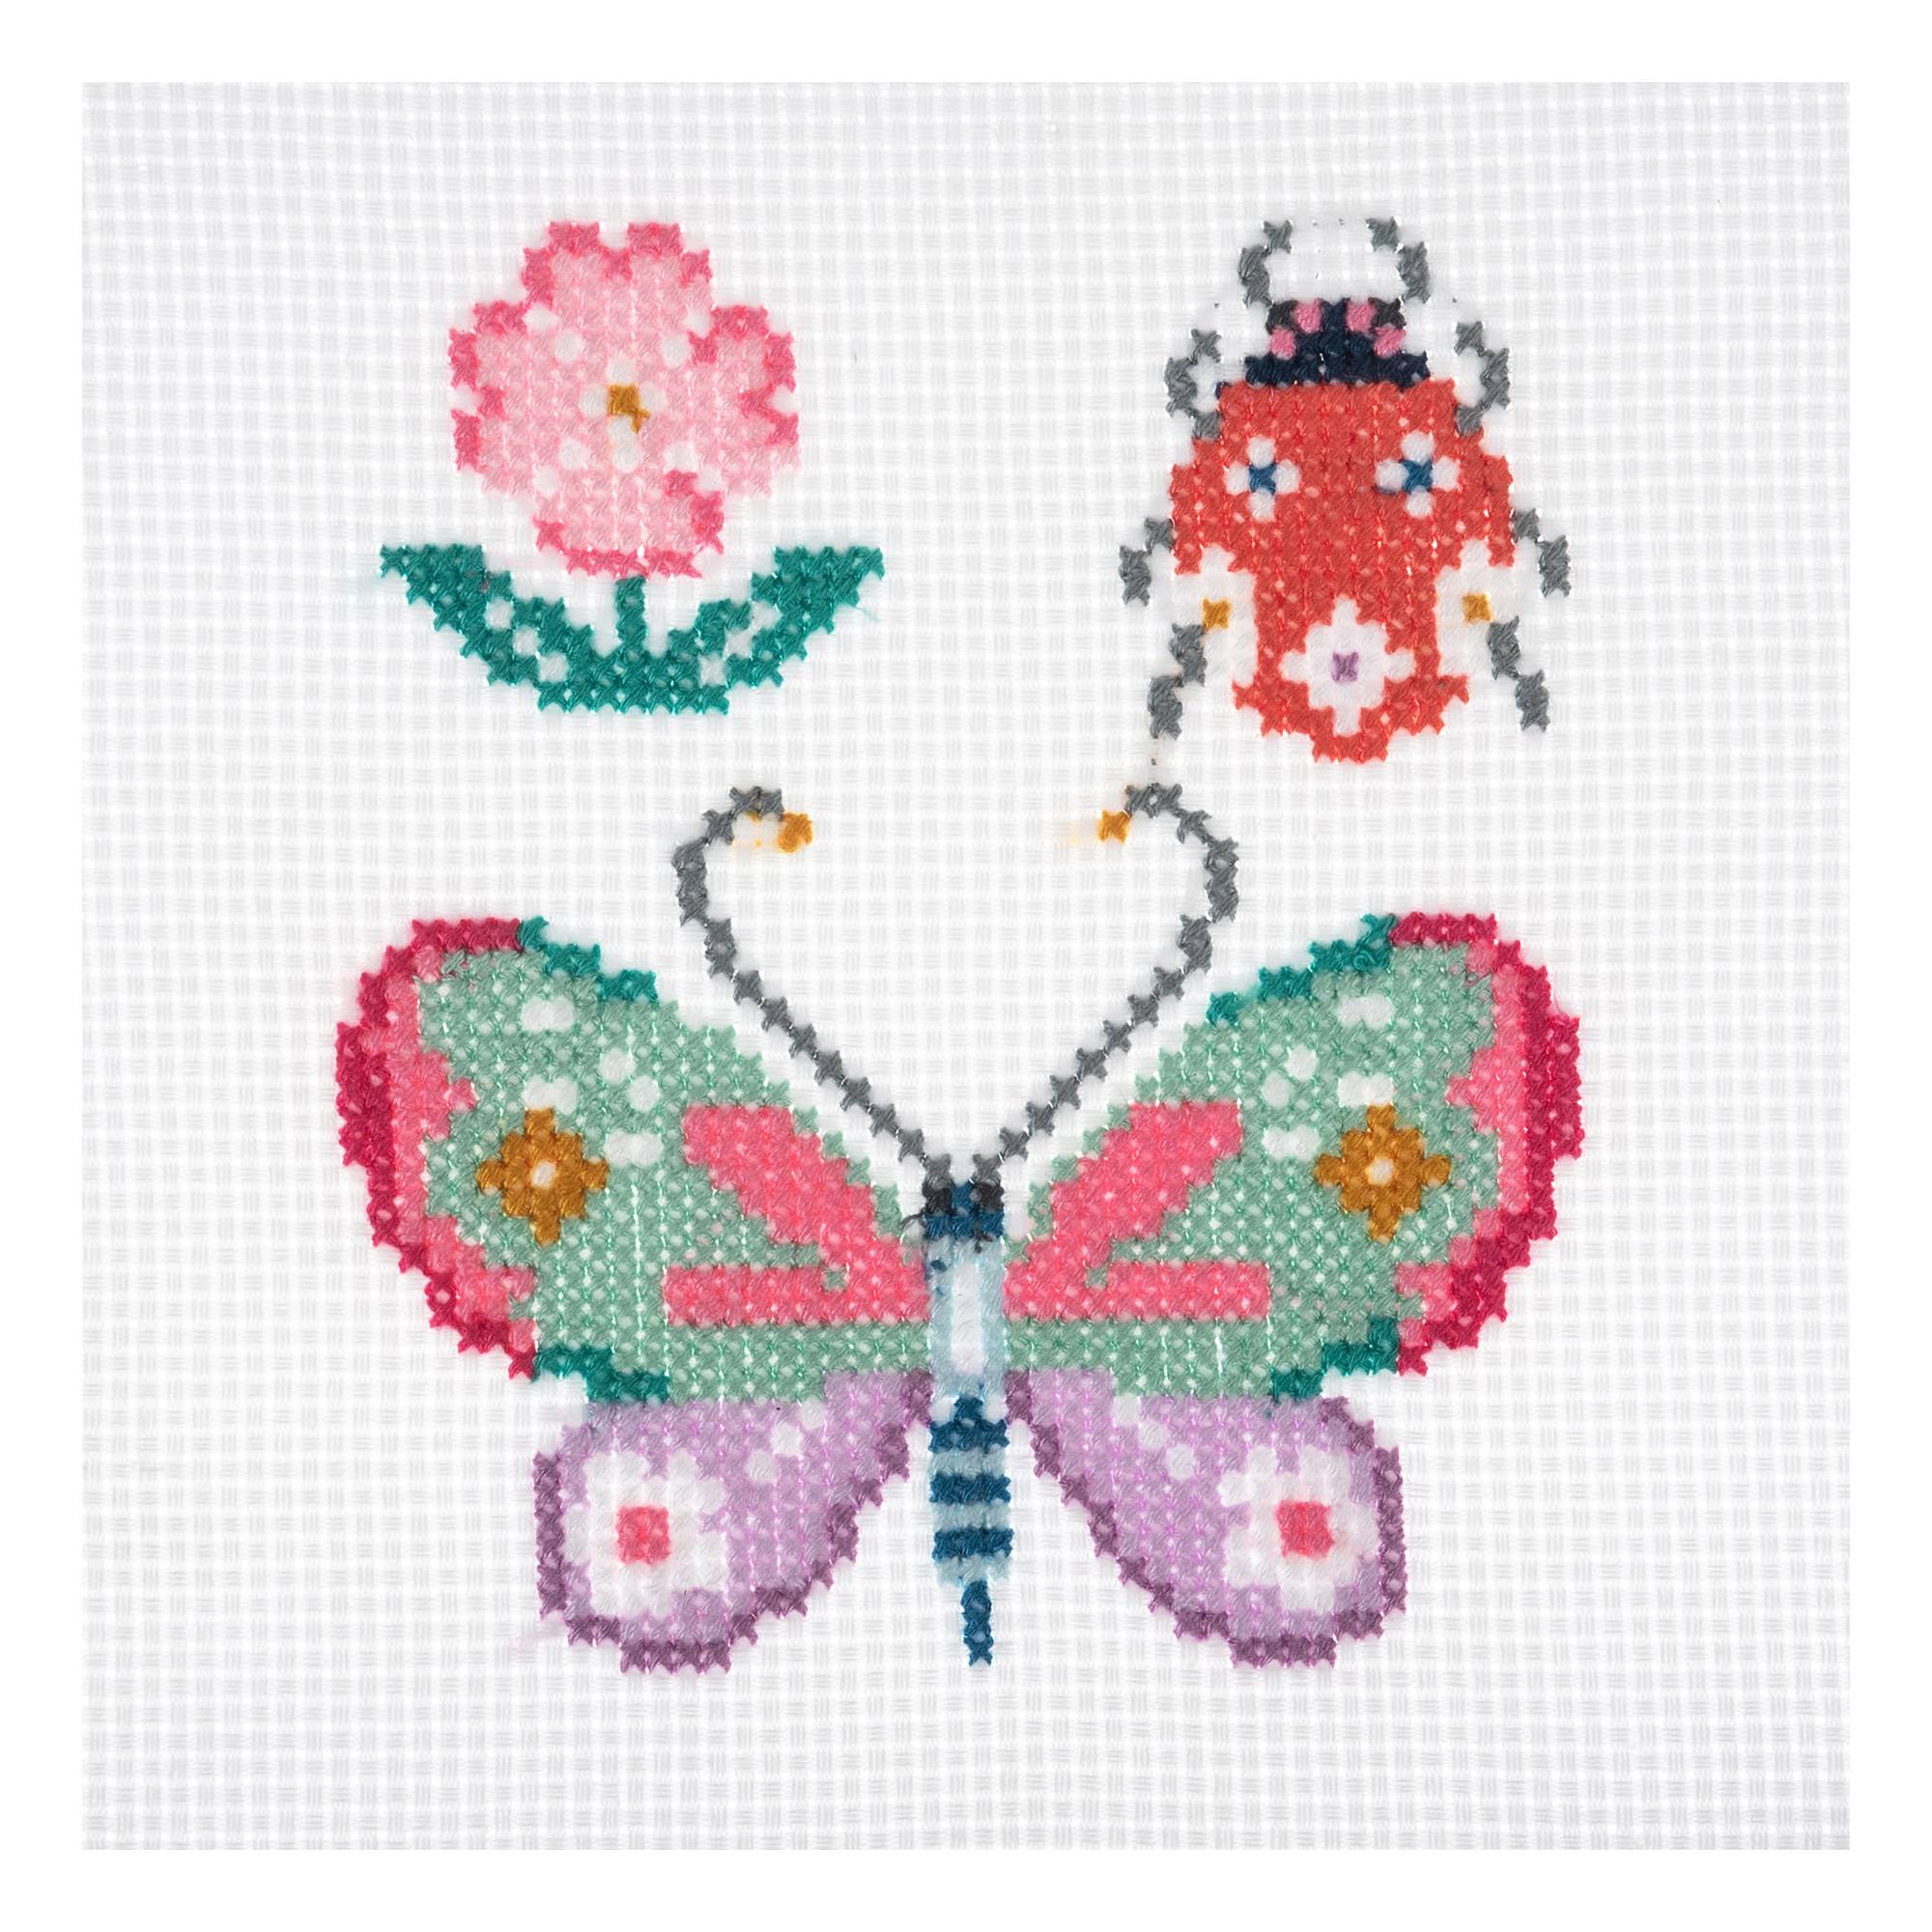 Trimits Butterfly and Bug Mini Cross Stitch Kit 13cm x 13cm